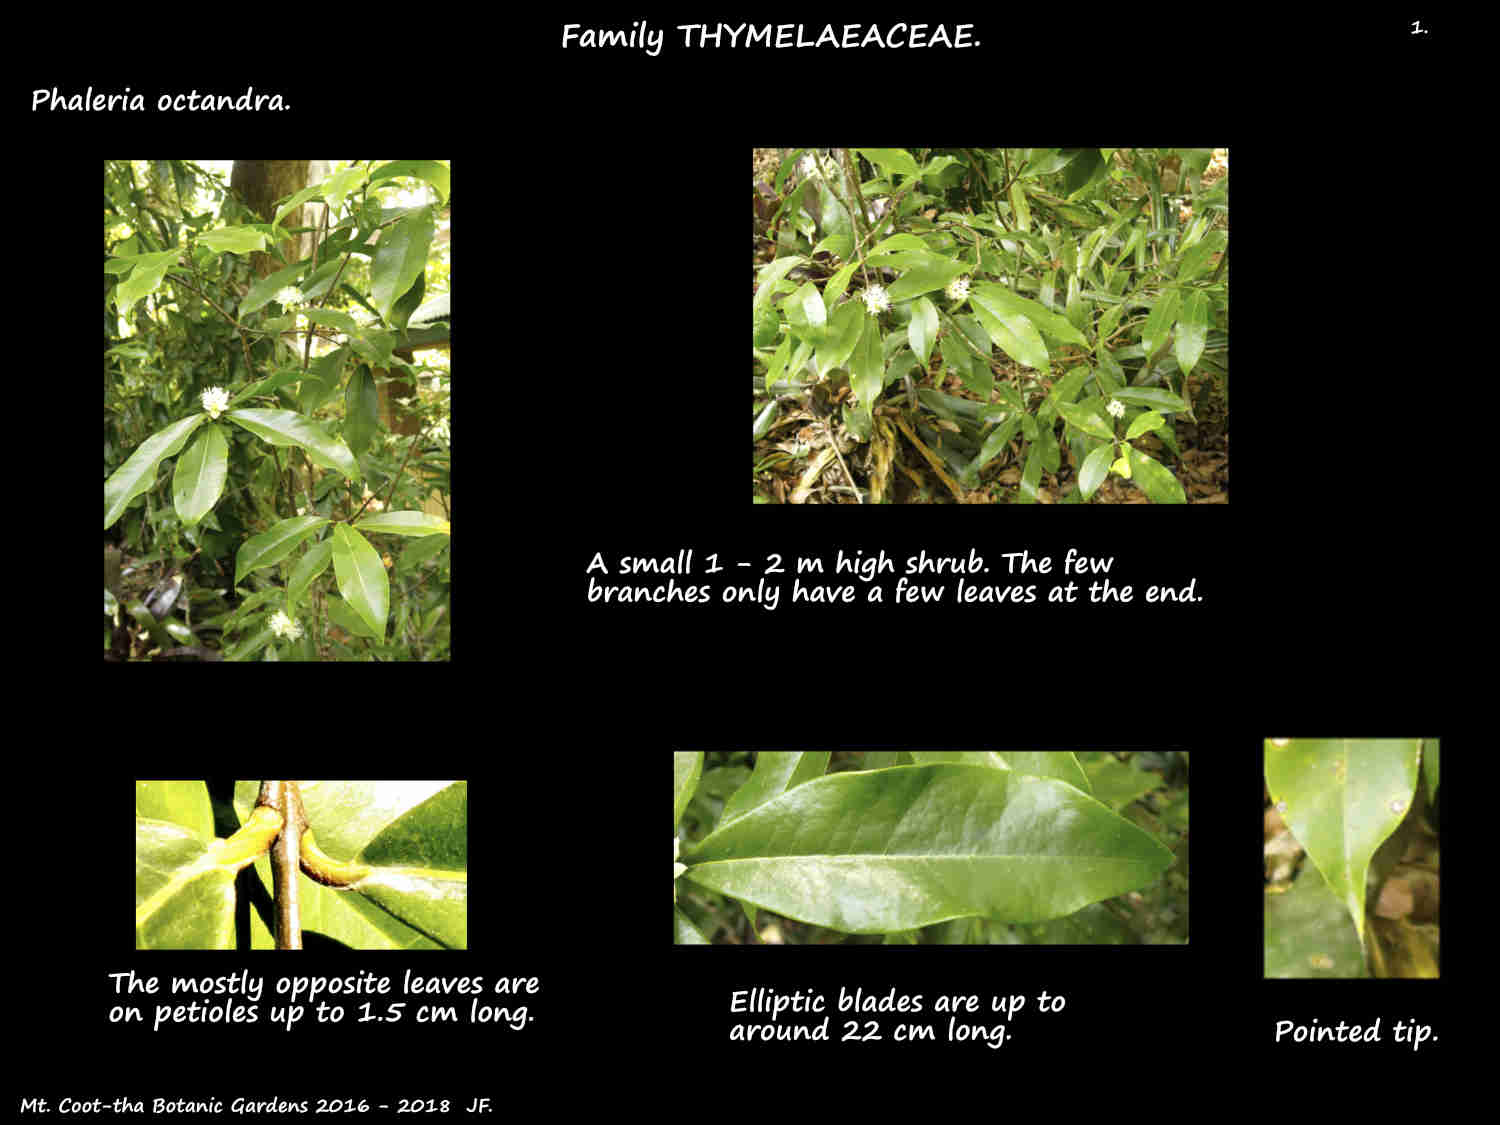 1 A small Phaleria octandra shrub & leaves